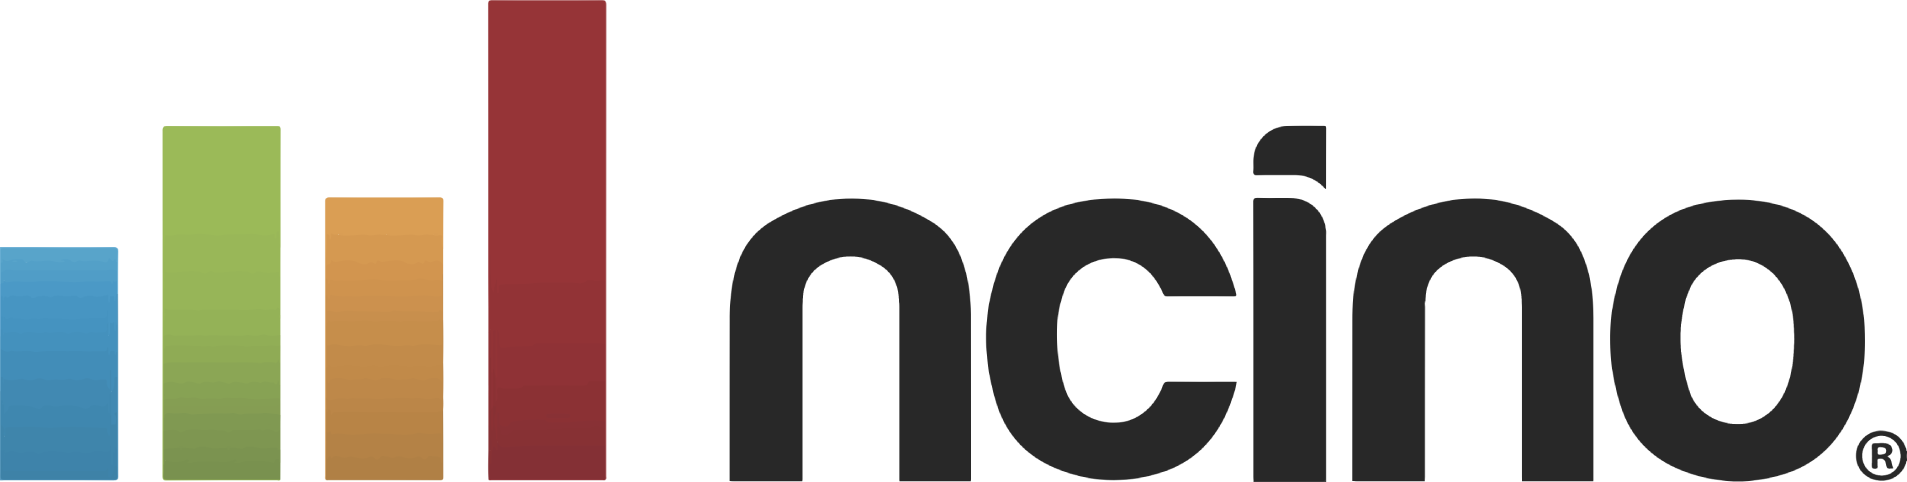 nCino logo large (transparent PNG)